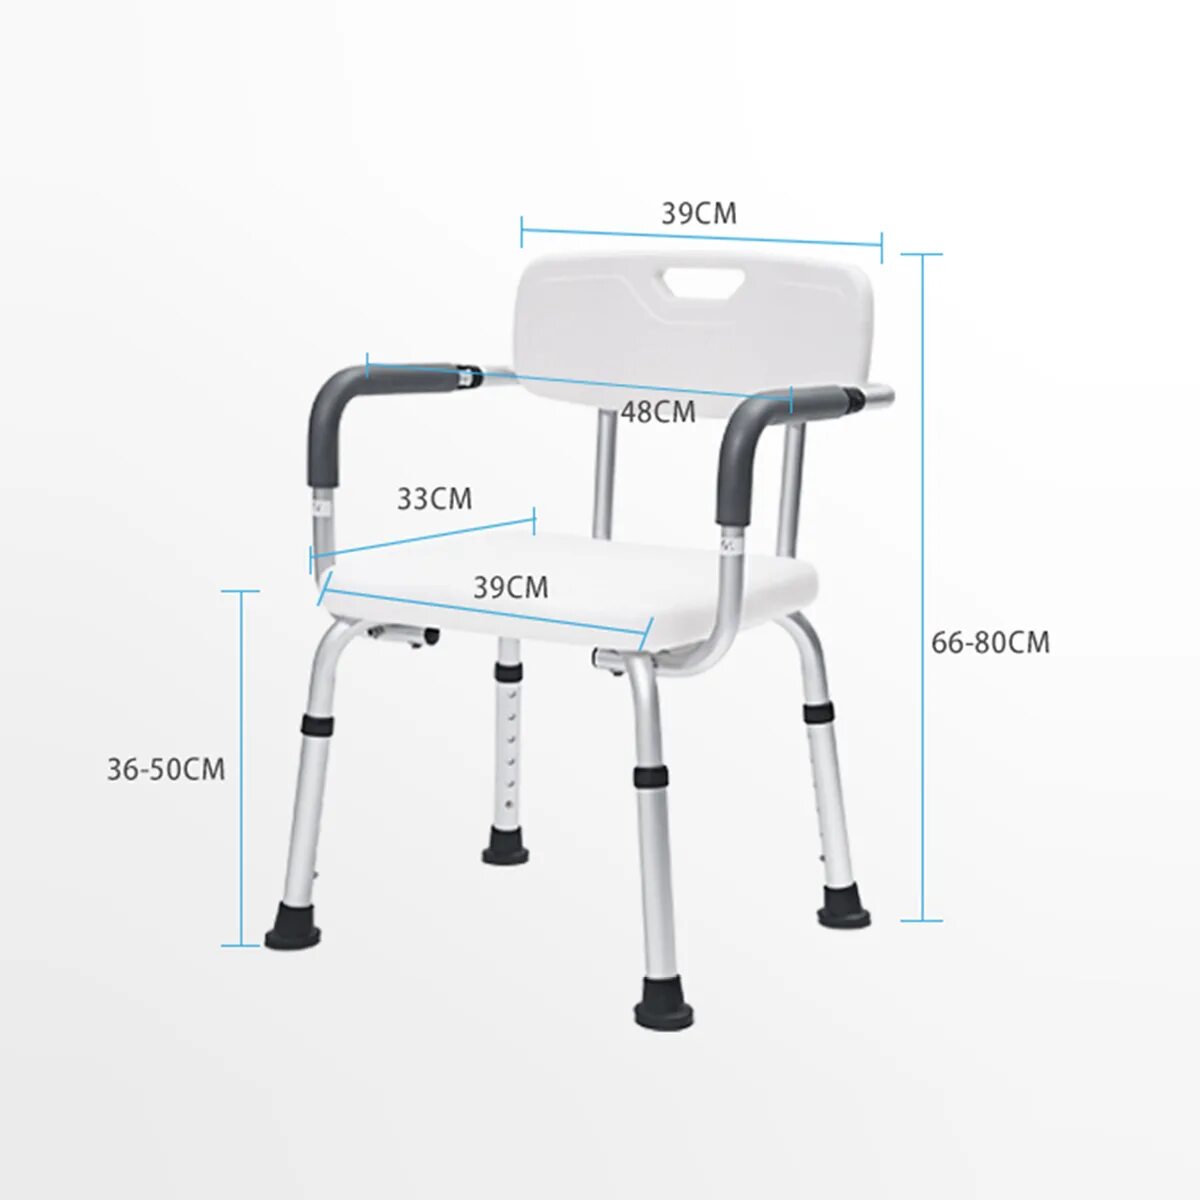 Стул для ванной нагрузка 150 кг Титан. BS Bench стул для ванн/душа. Стул для ванны для пожилых мега Оптим LK 4010. Стул для ванной для пожилых BS Bench.